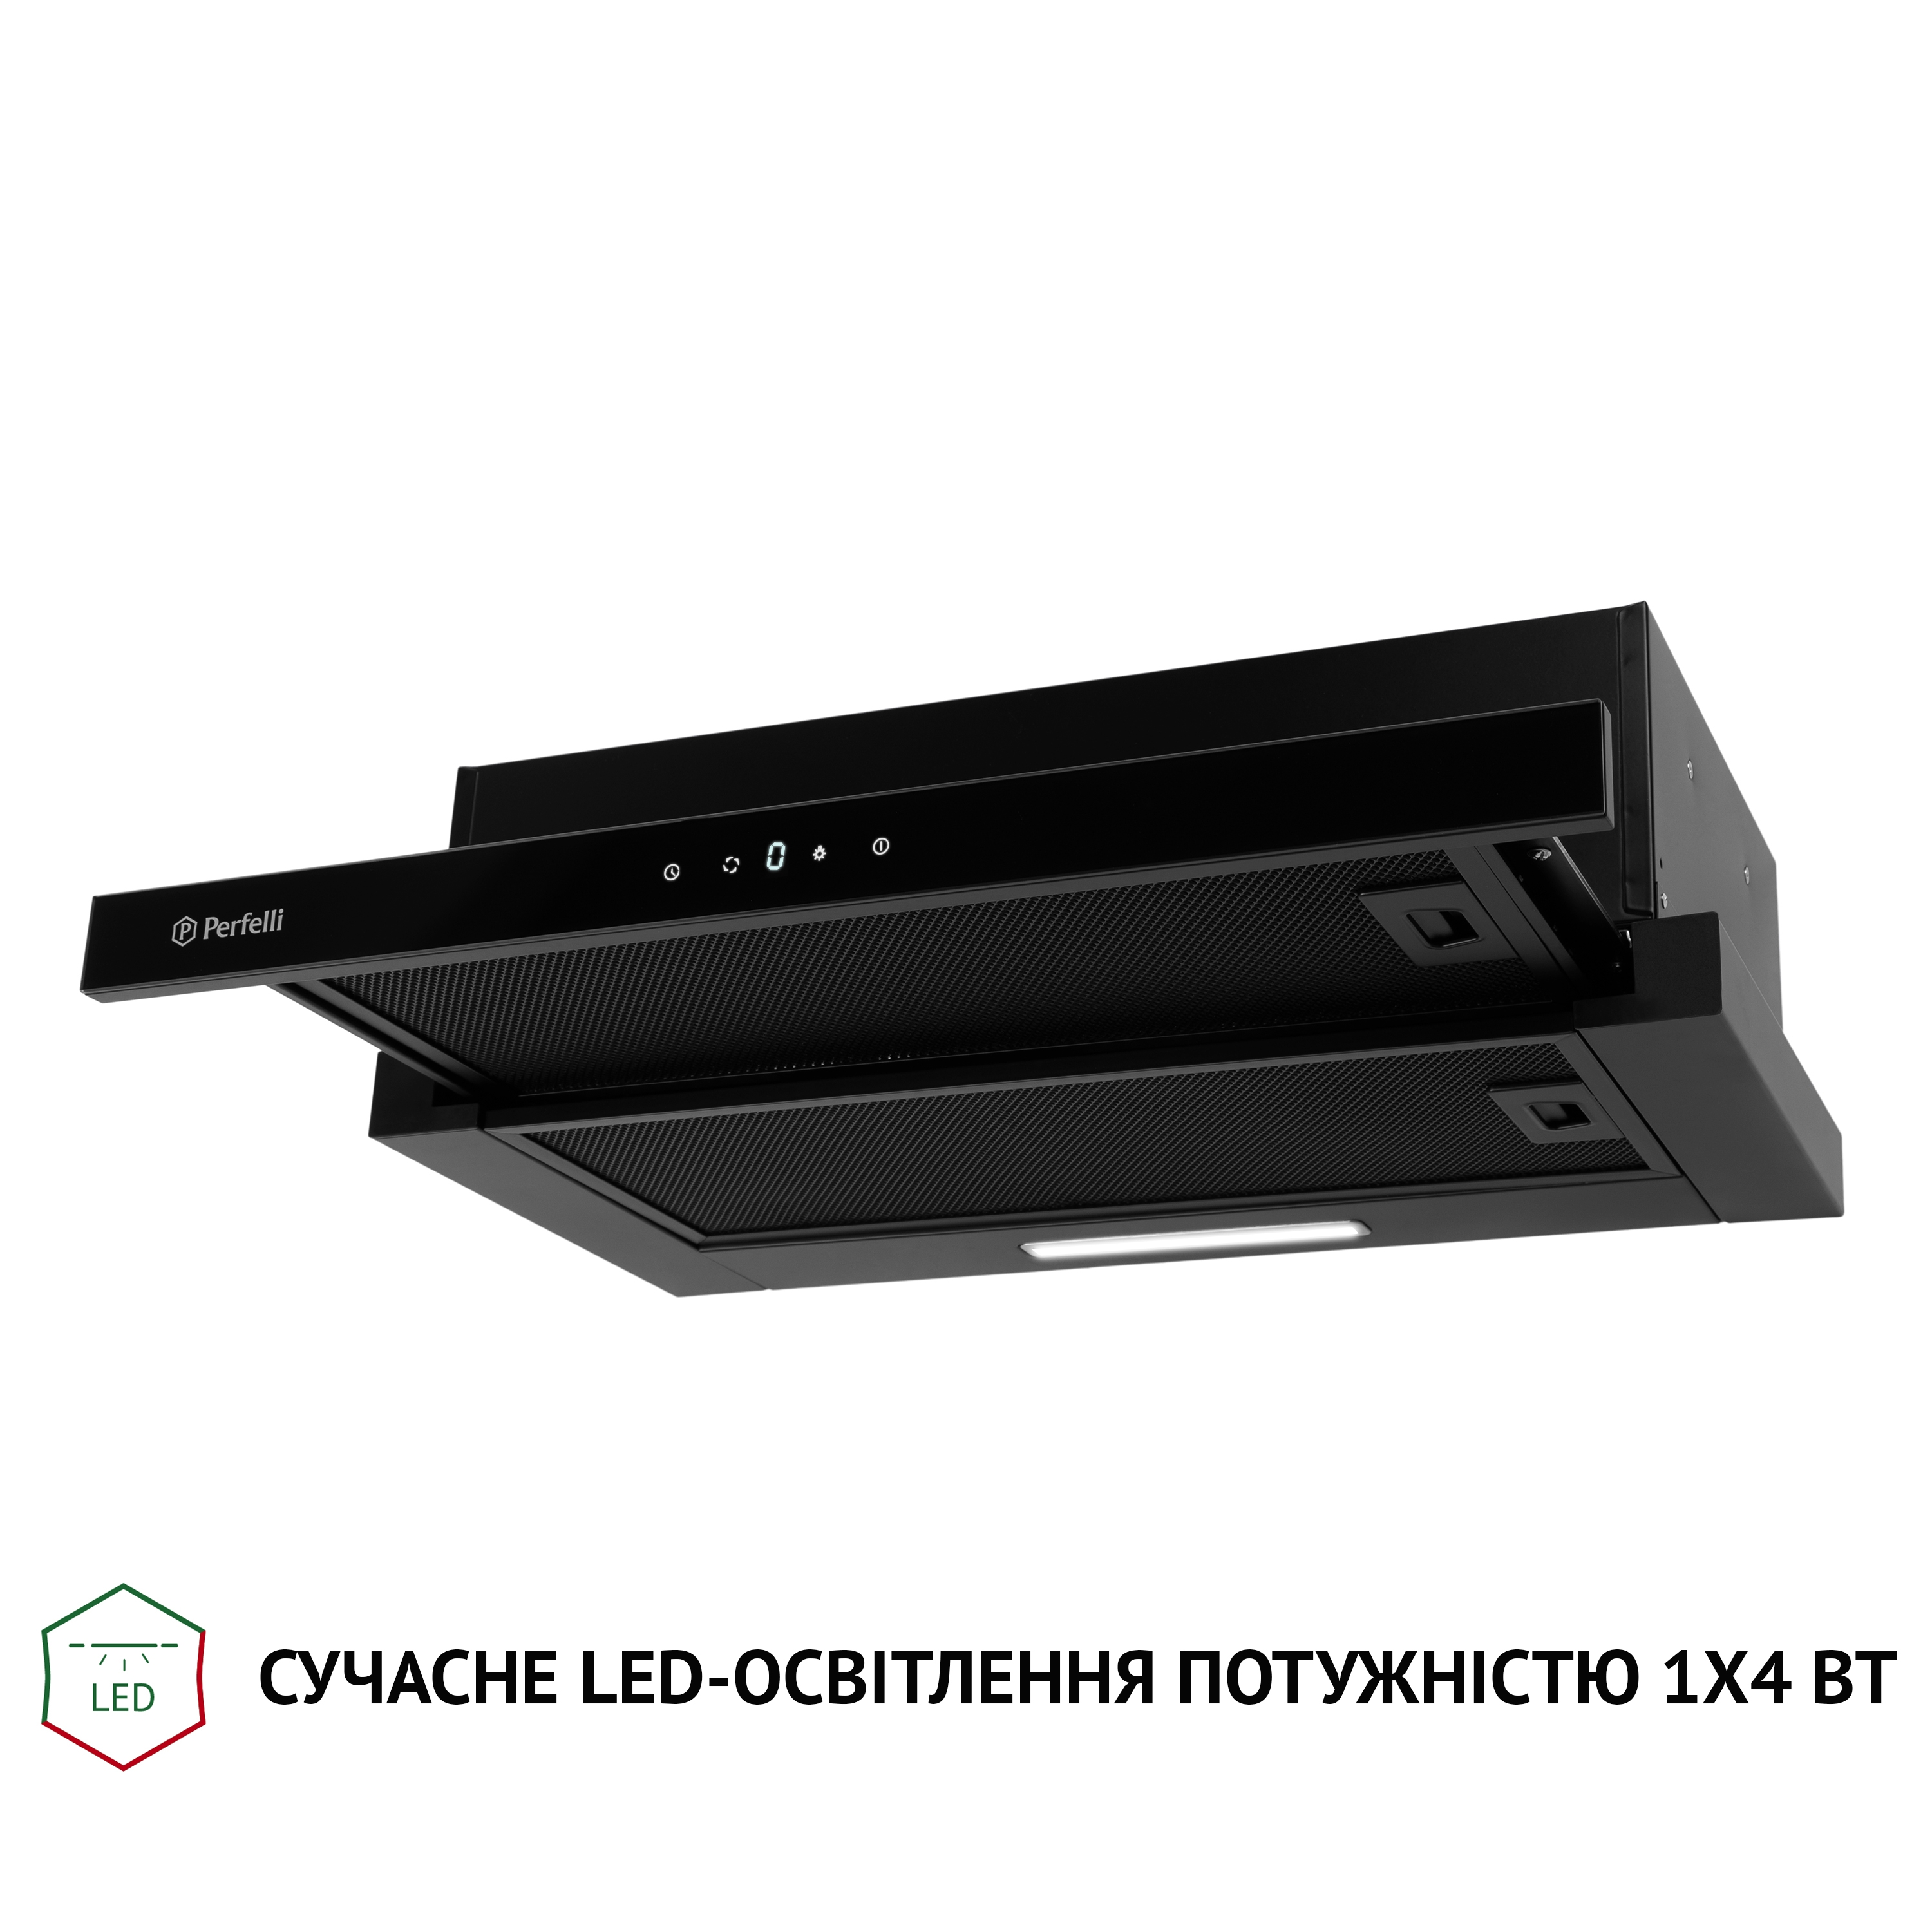 продаём Perfelli TLS 6363 BL 700 LED Sensor в Украине - фото 4